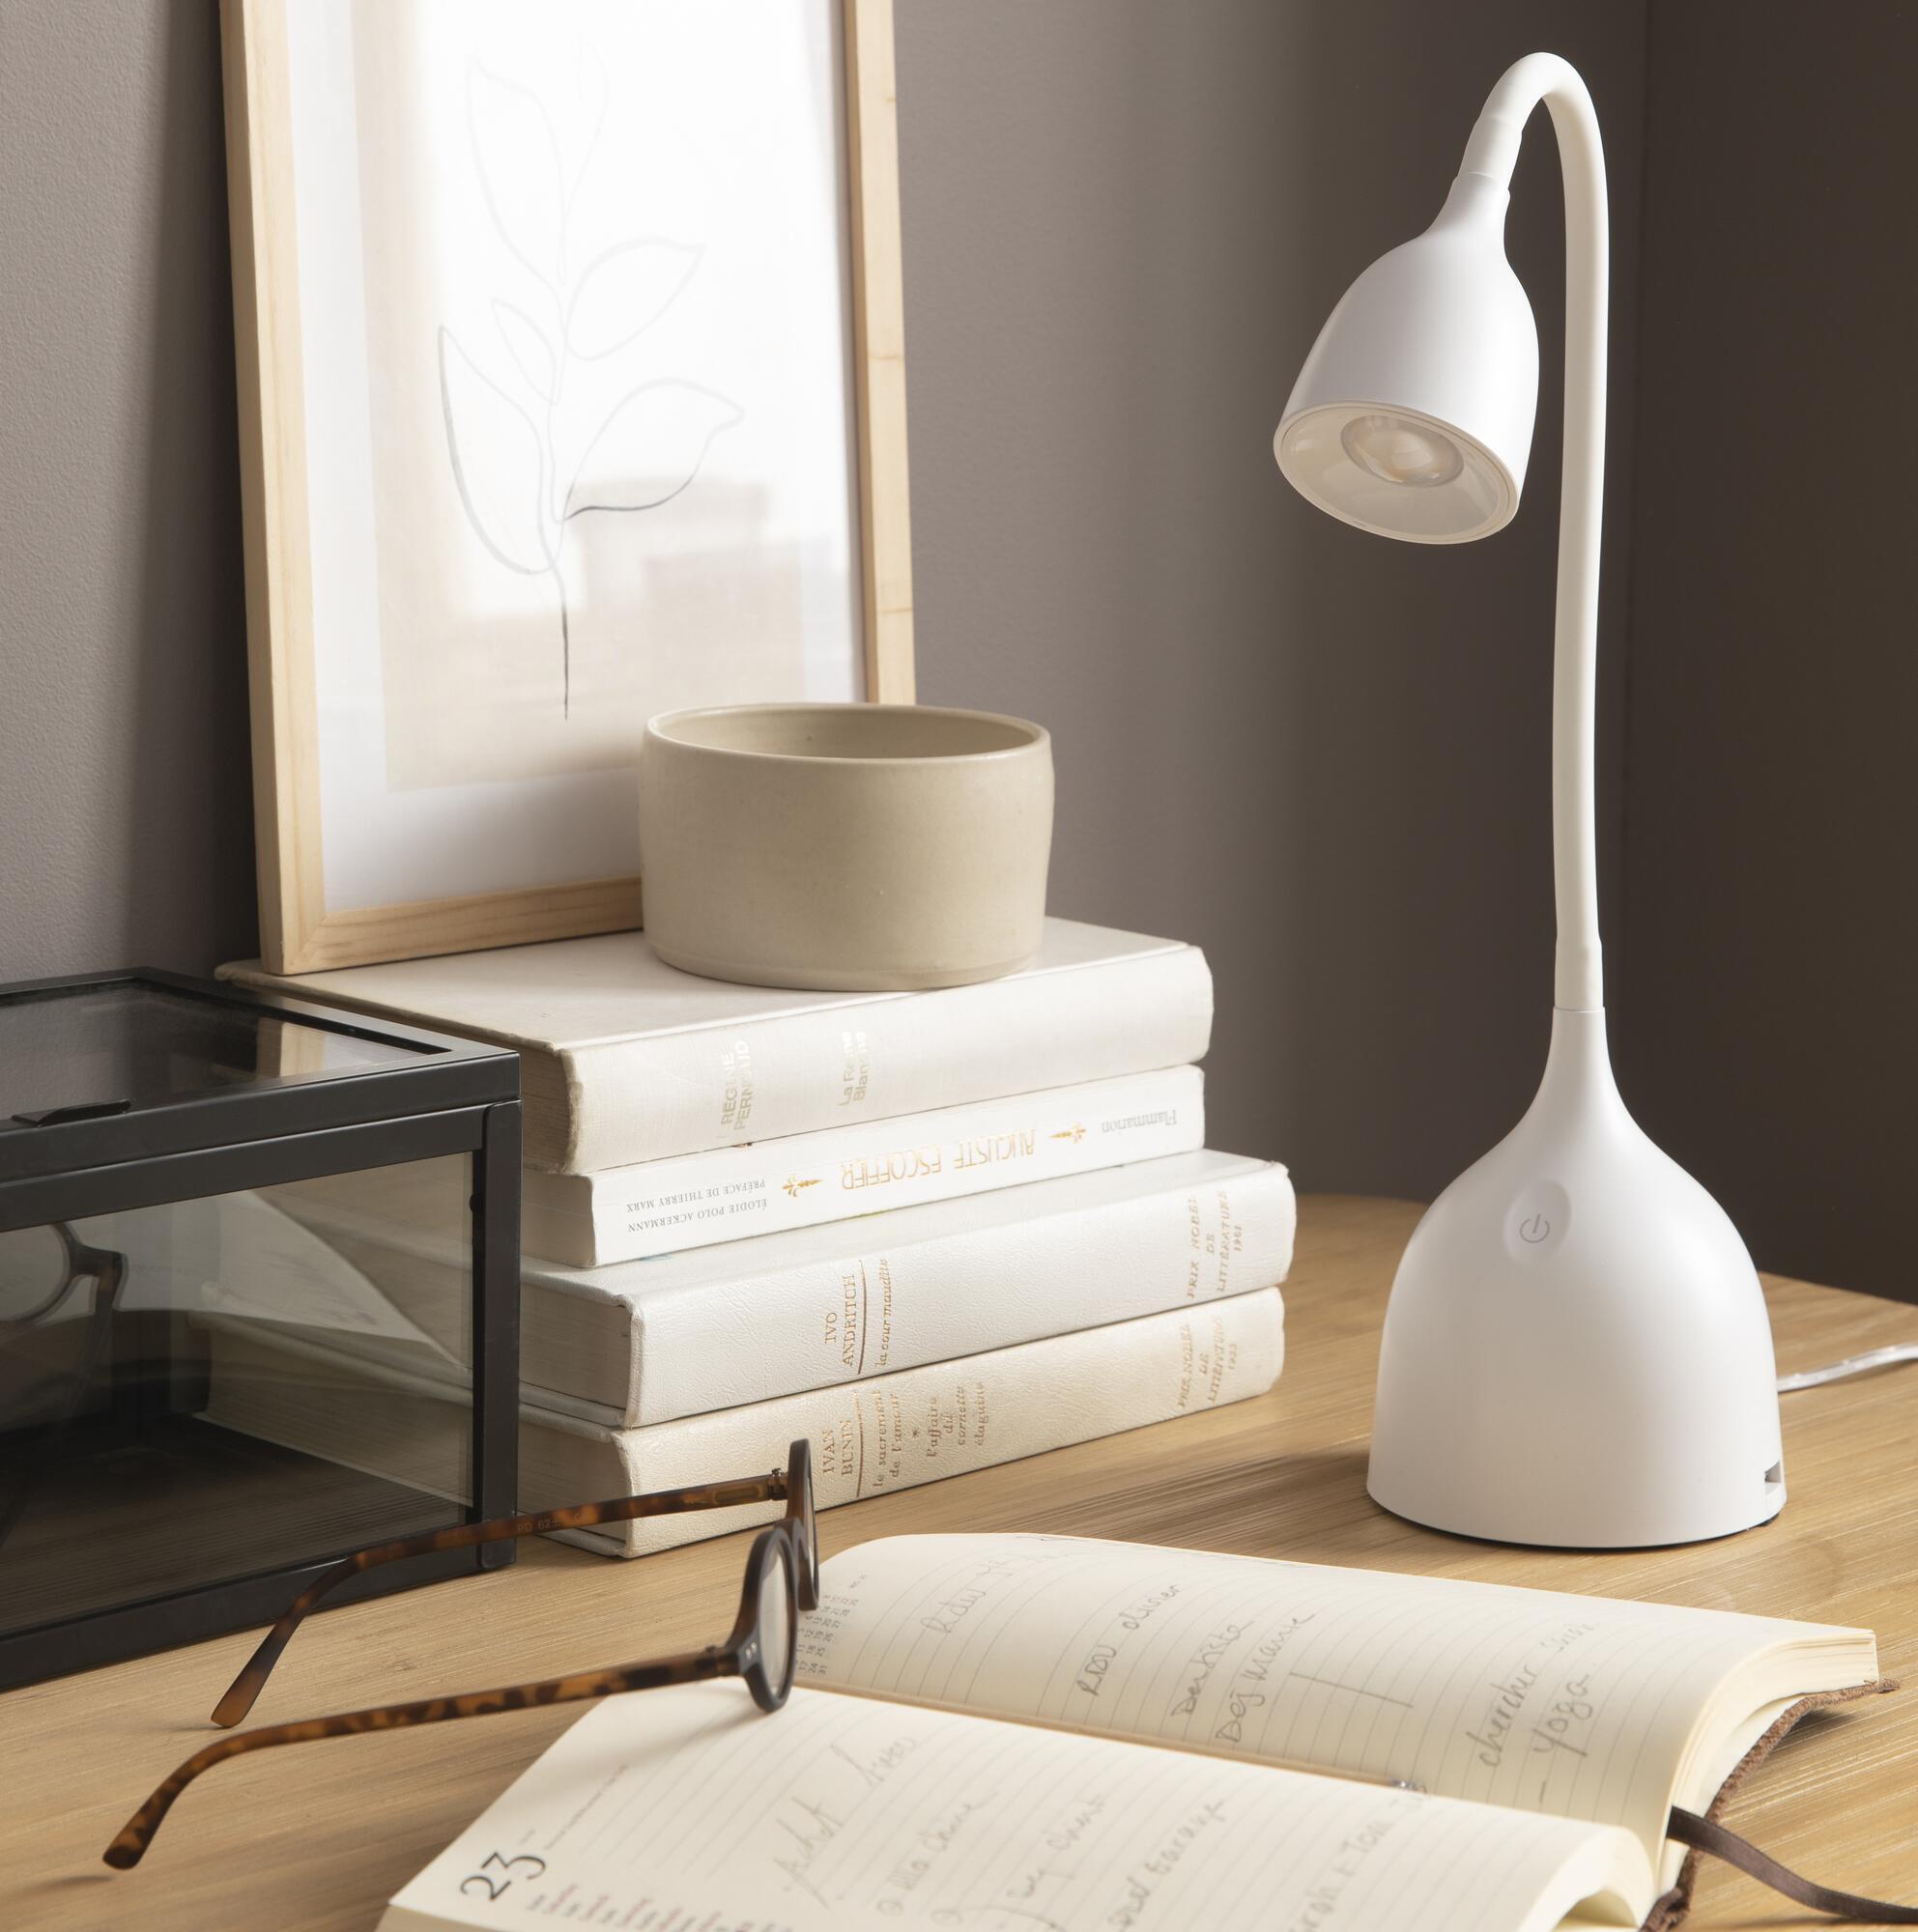 Lampe de bureau, design, métal blanc tactile, INSPIRE Mei, 620lm